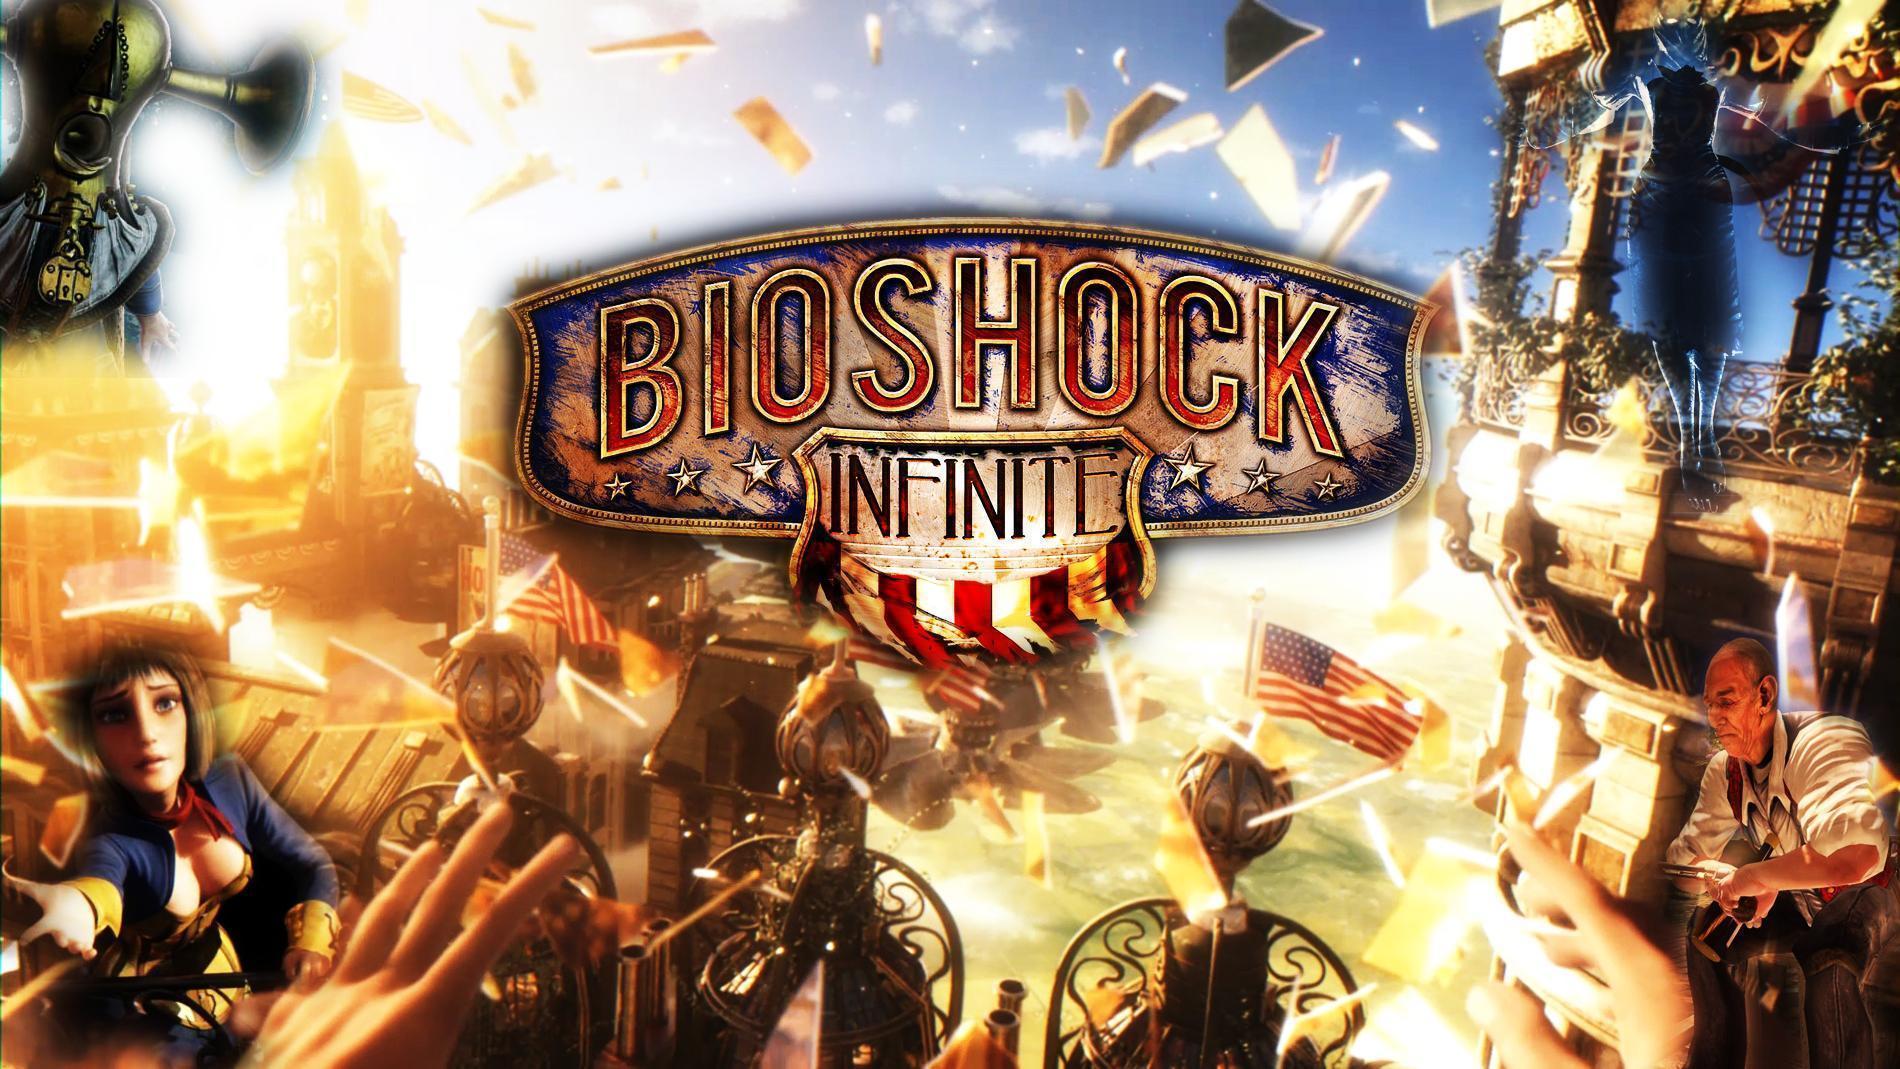 BioShock Infinite Wallpaper Photo, BioShock Infinite, Game